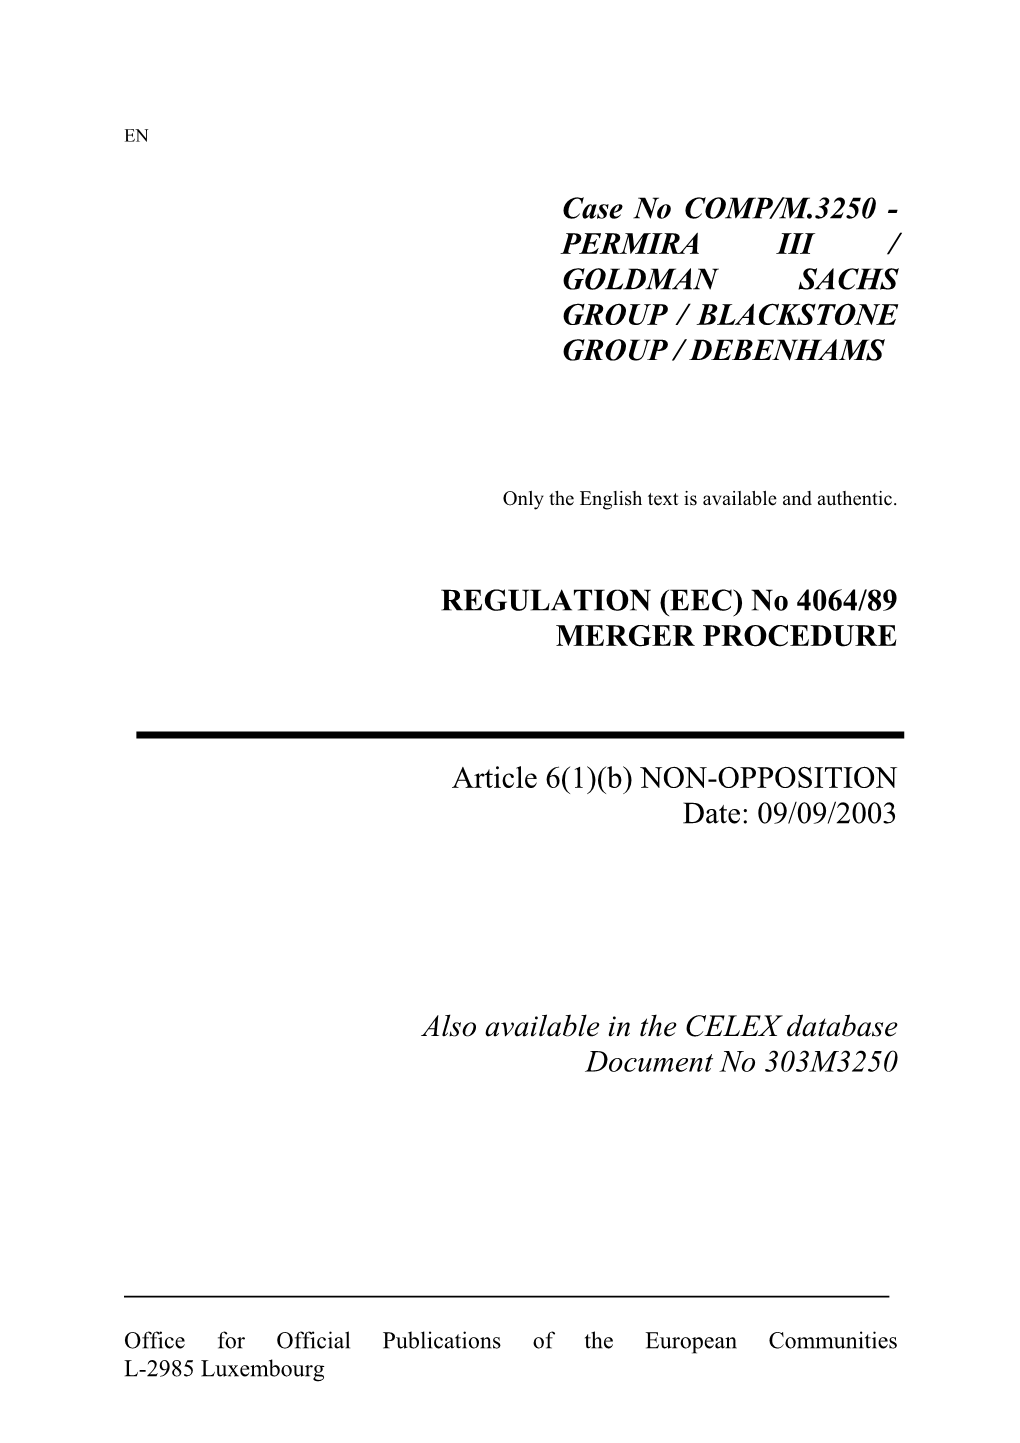 Case No COMP/M.3250 - PERMIRA III / GOLDMAN SACHS GROUP / BLACKSTONE GROUP / DEBENHAMS